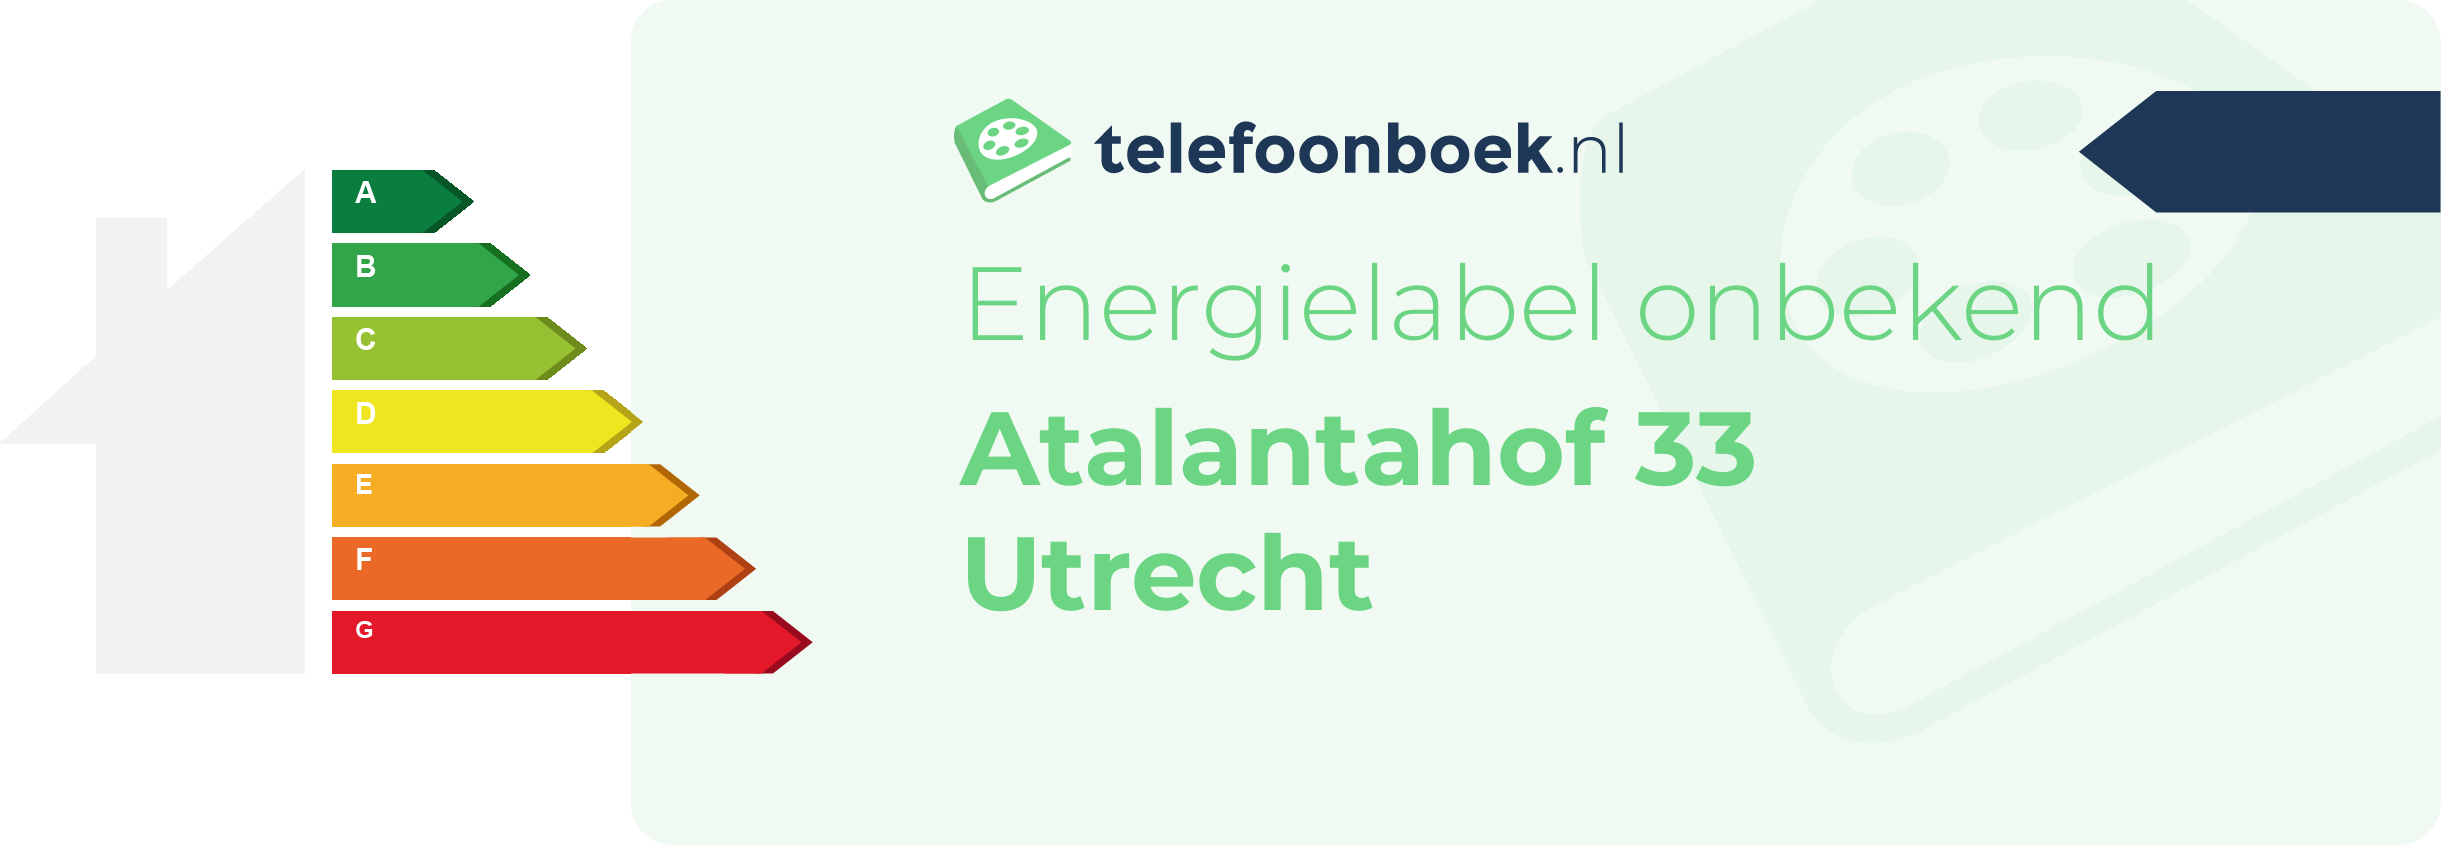 Energielabel Atalantahof 33 Utrecht